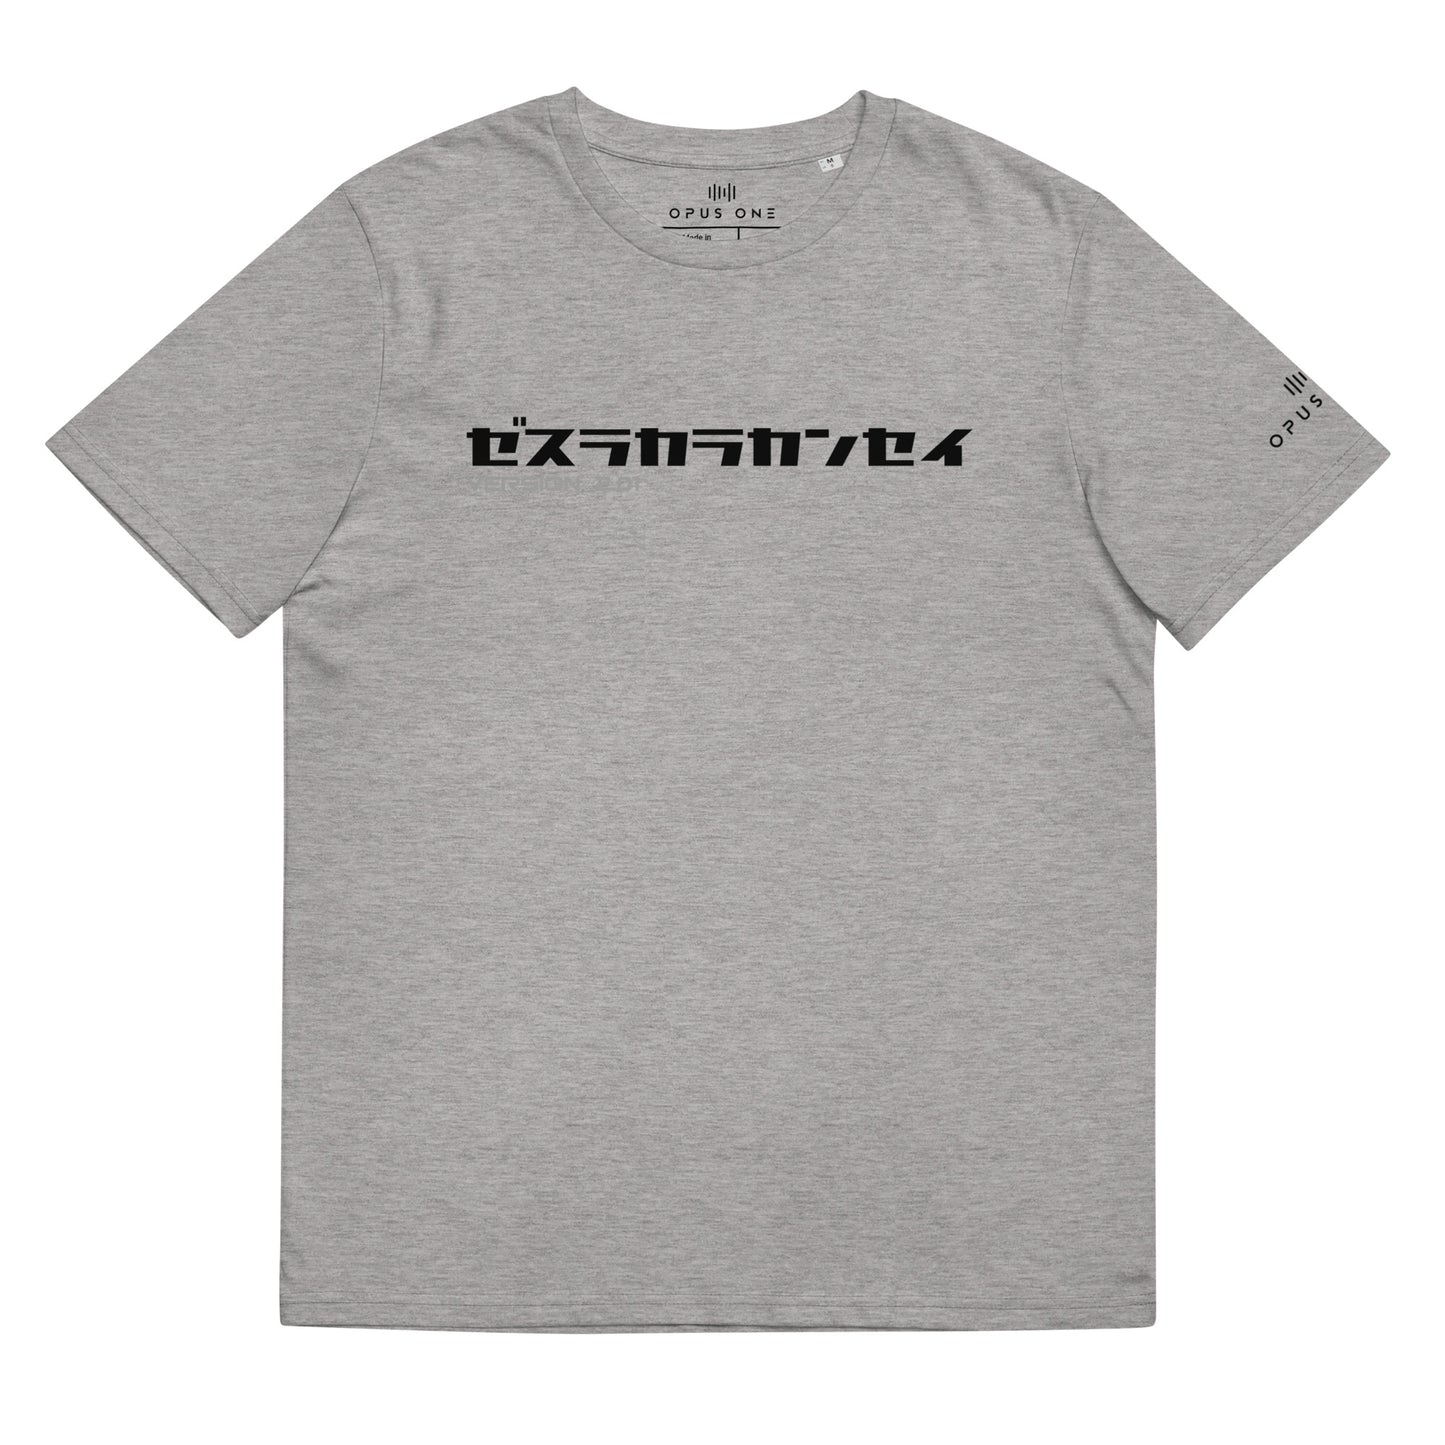 Prototype (v1) Unisex organic cotton t-shirt (Black Text)